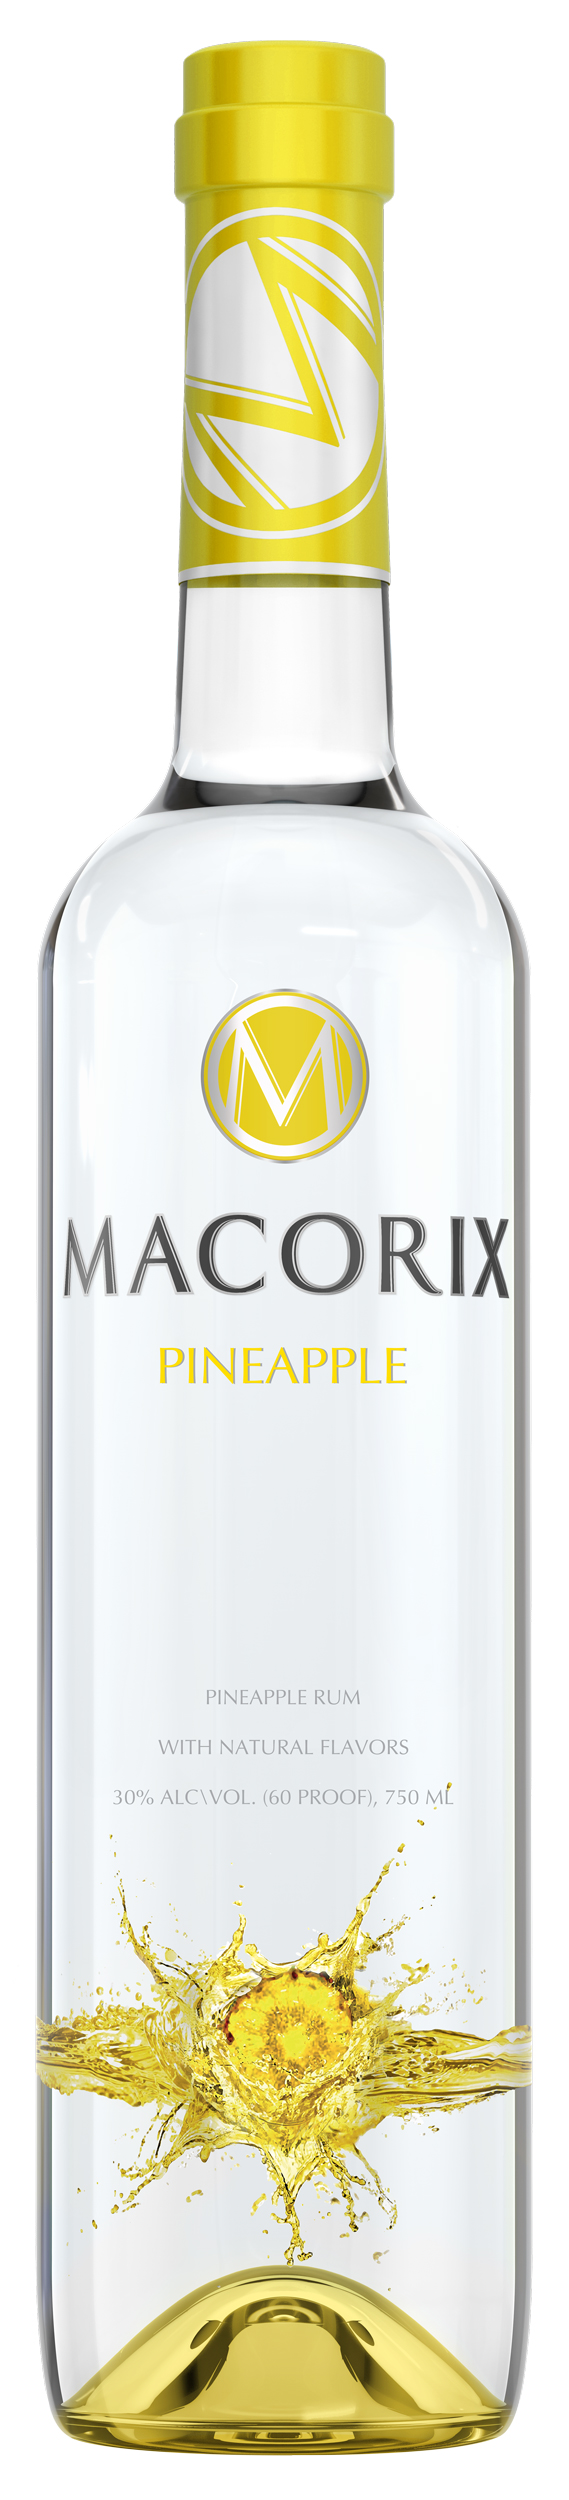 Macorix Cool Piña (Pinneaple) | Vinaio Imports